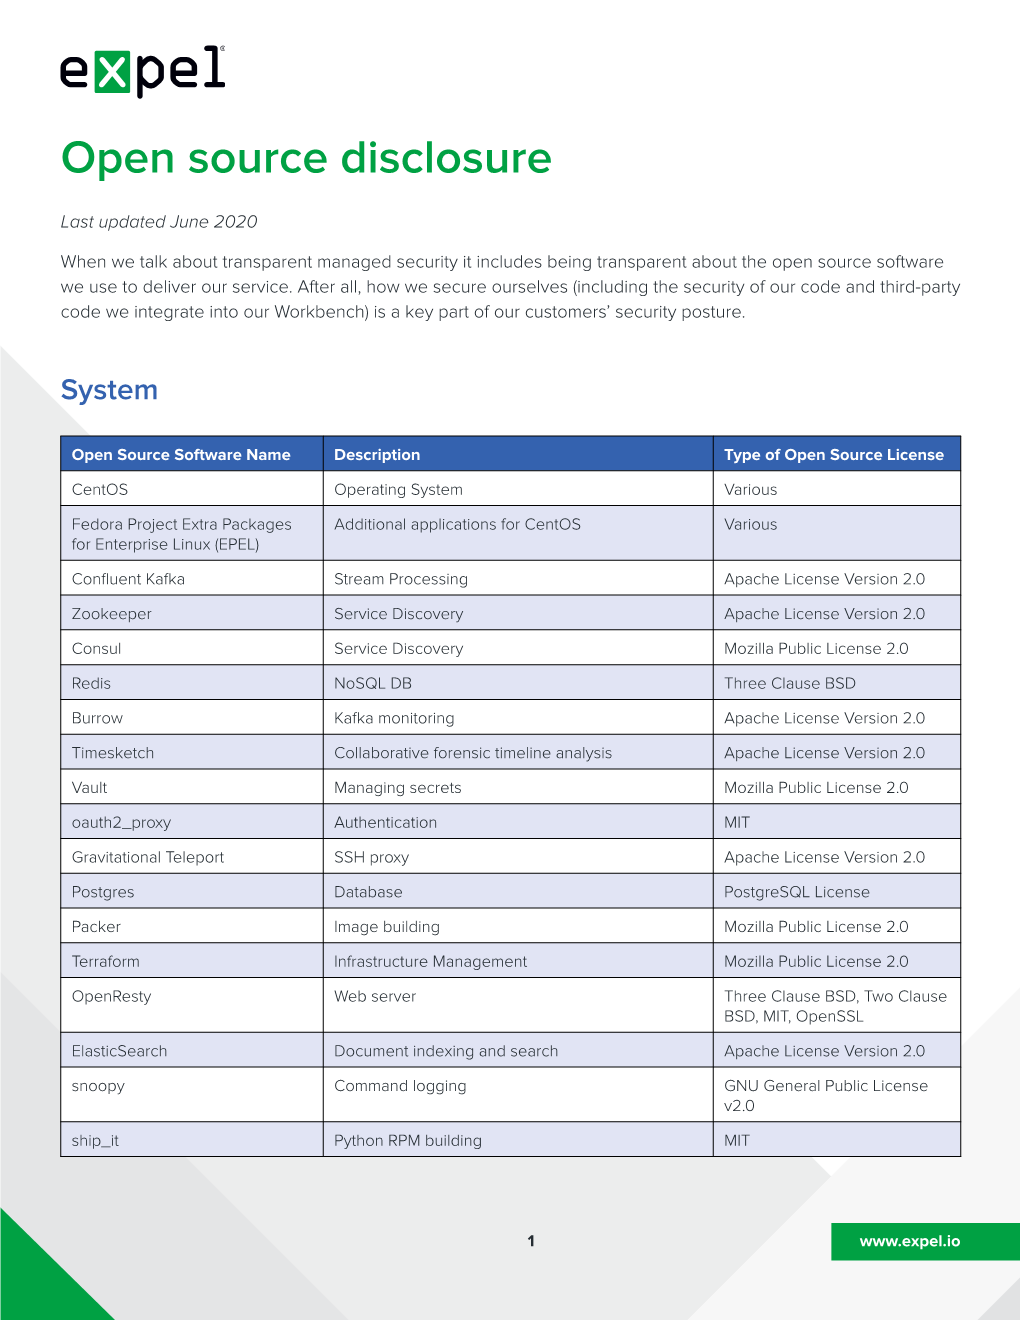 Open Source Disclosure